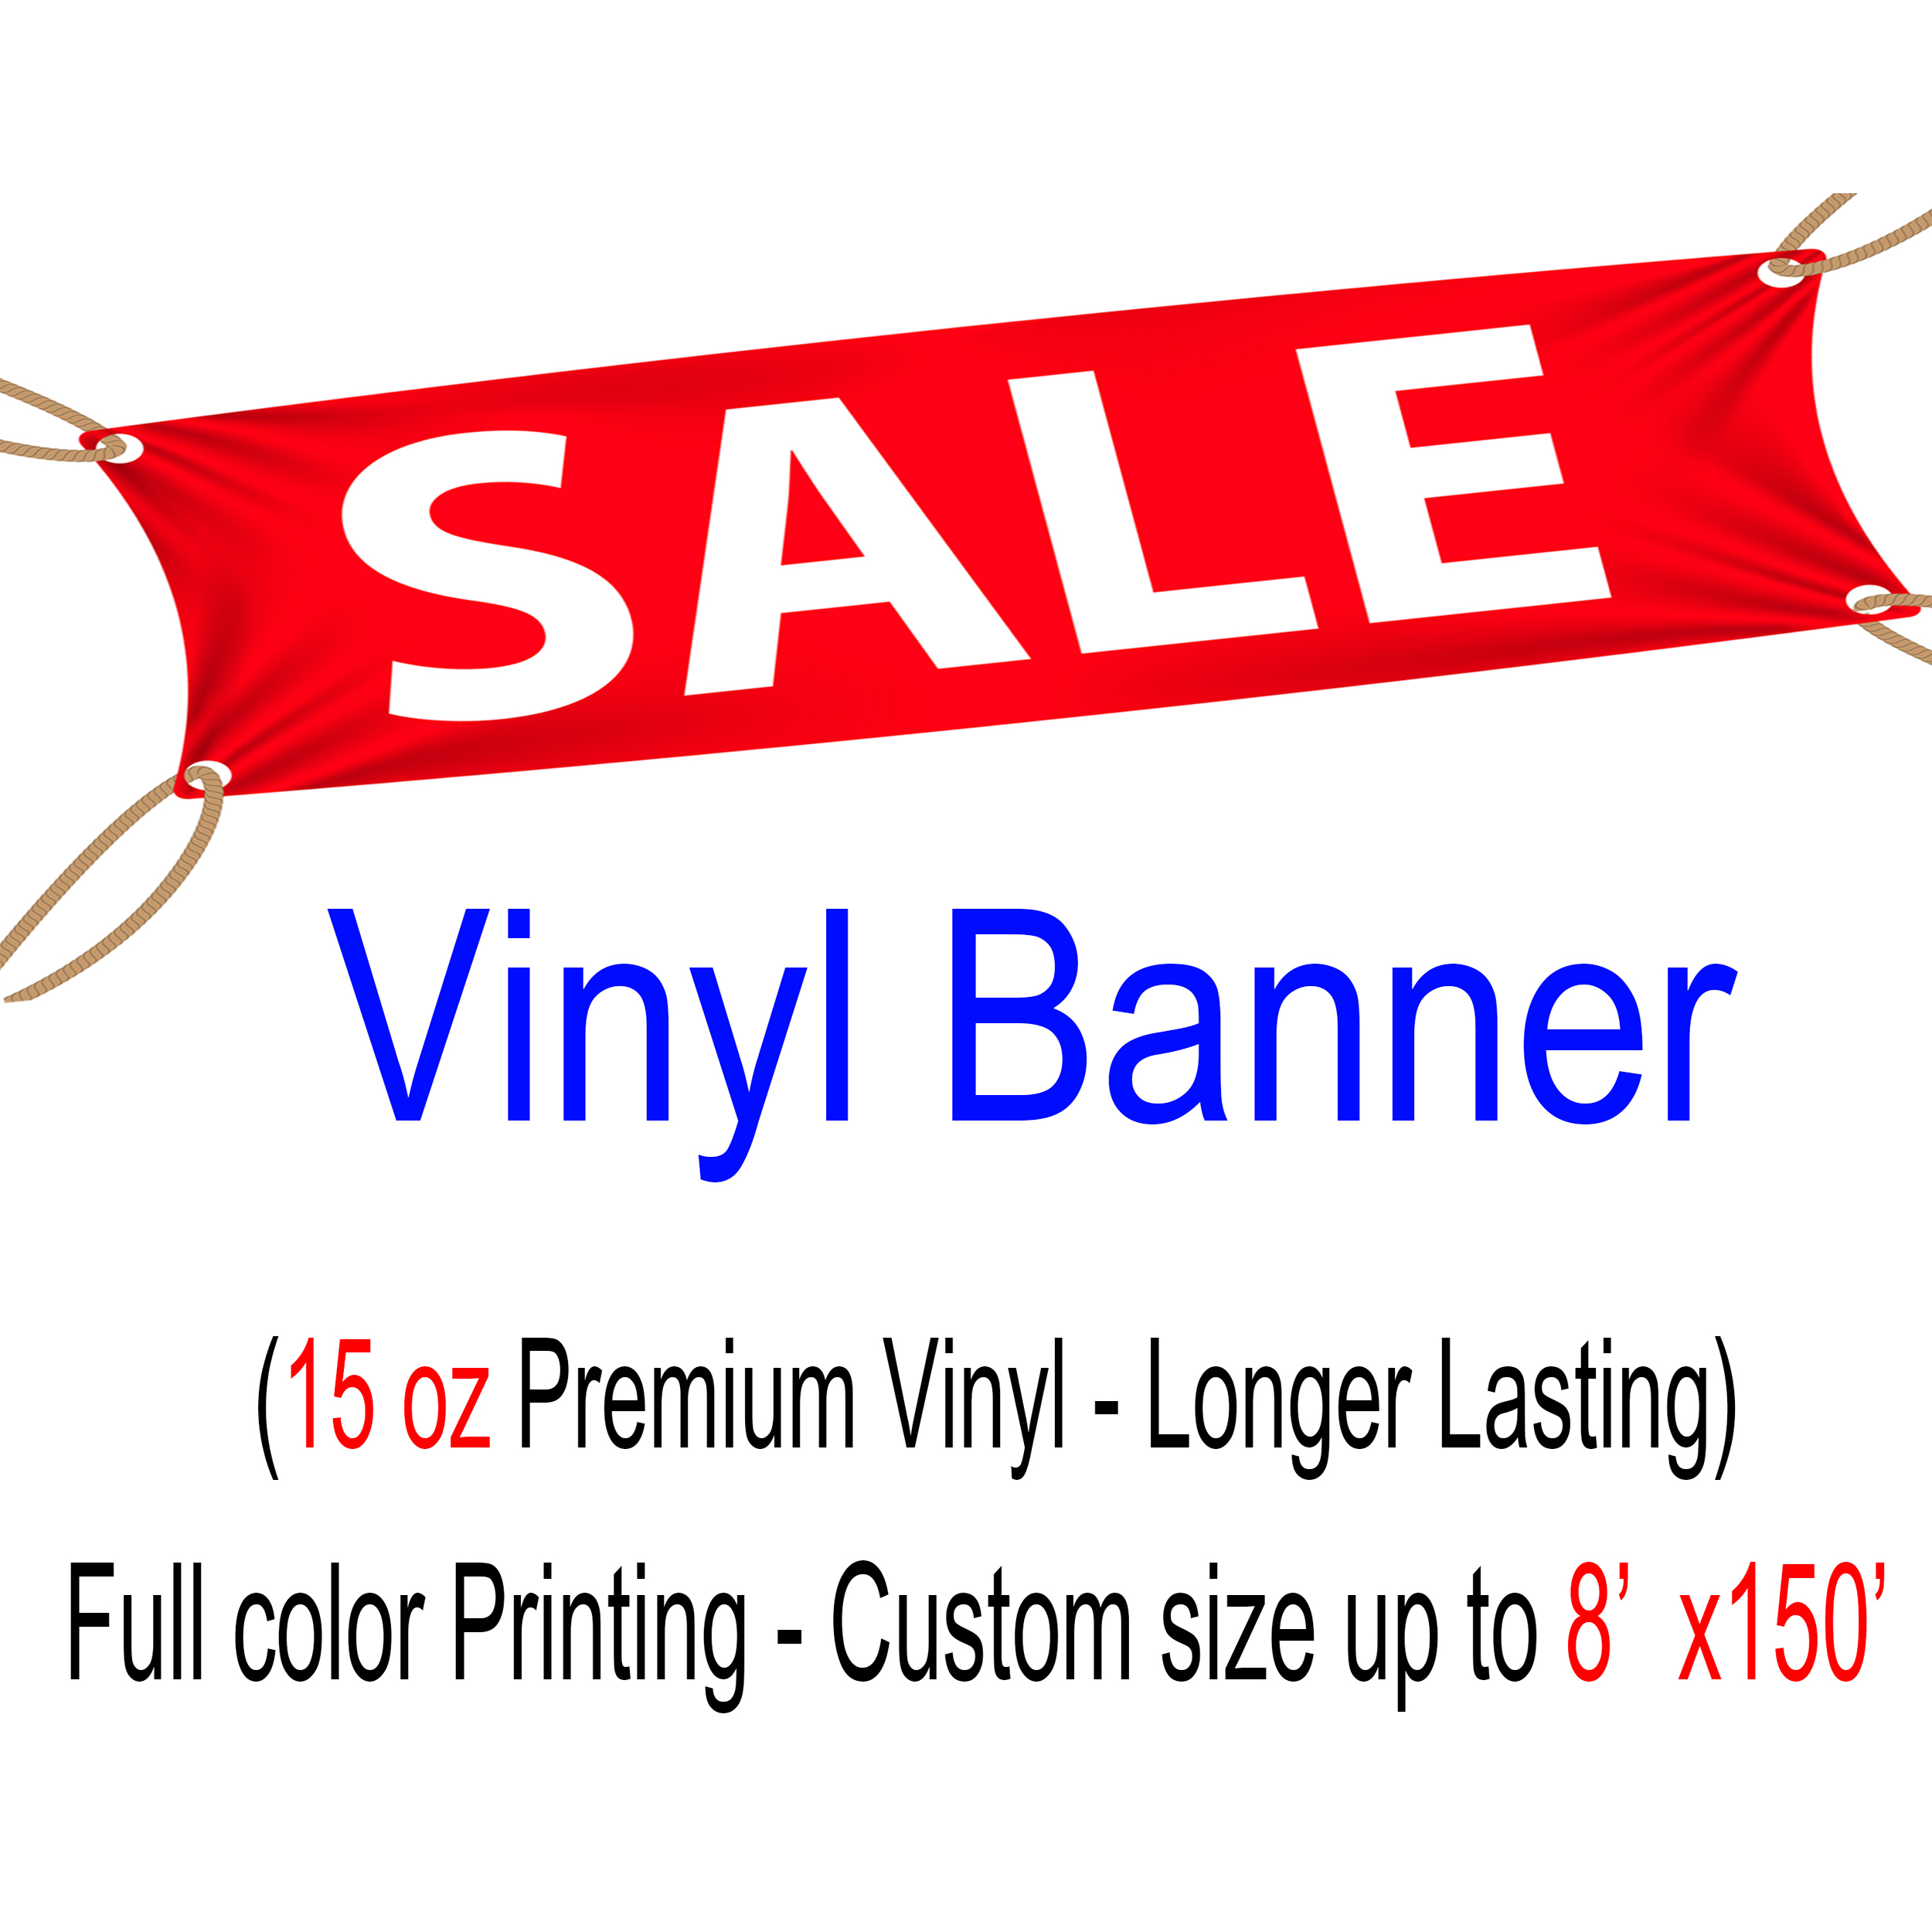 Vinyl Banners - Print Custom Vinyl Banners